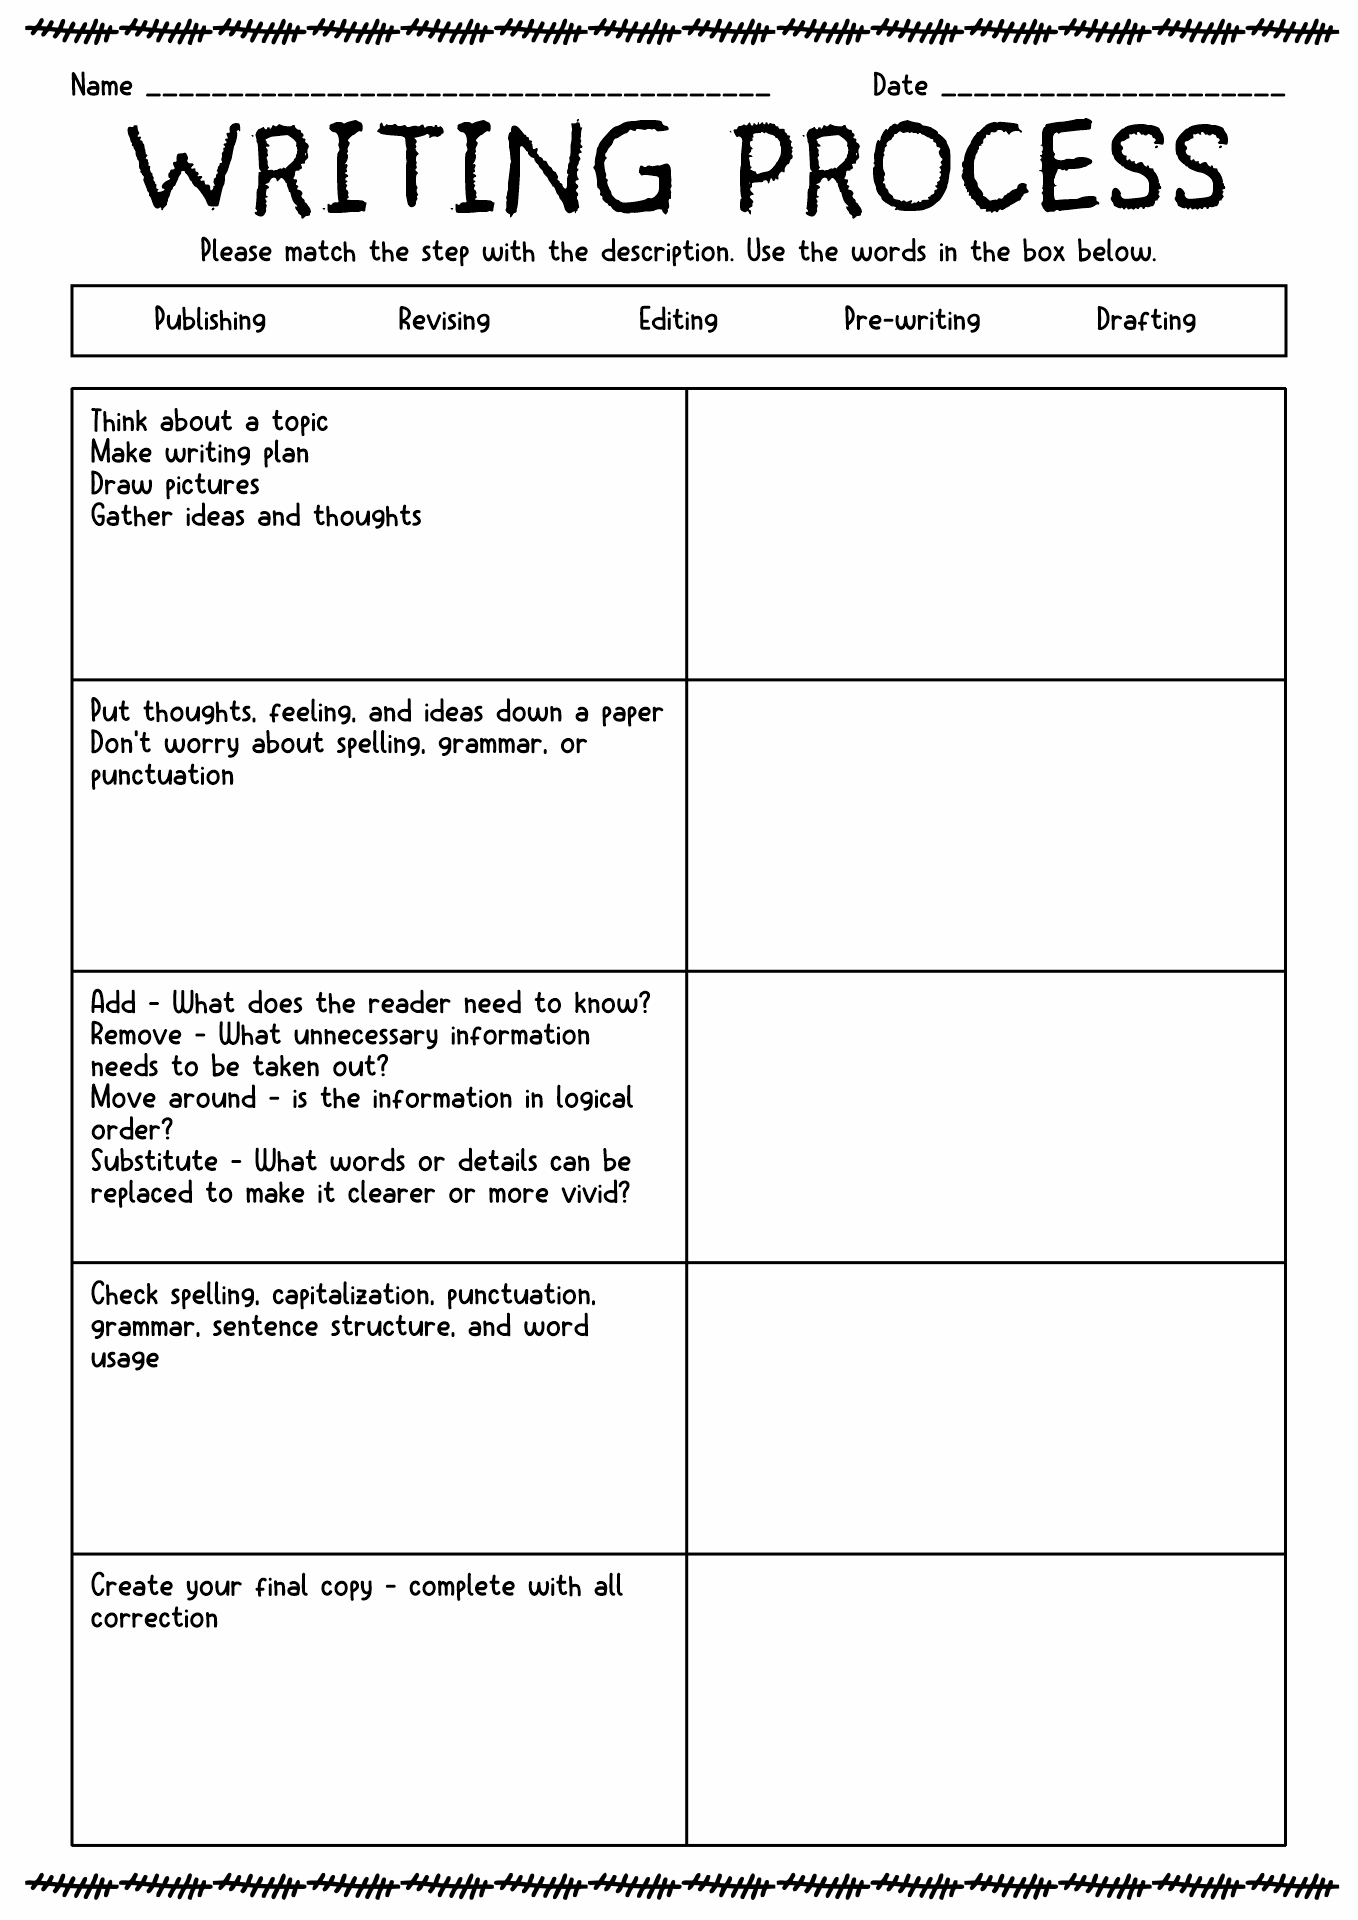 Writing Process Steps Worksheet Image